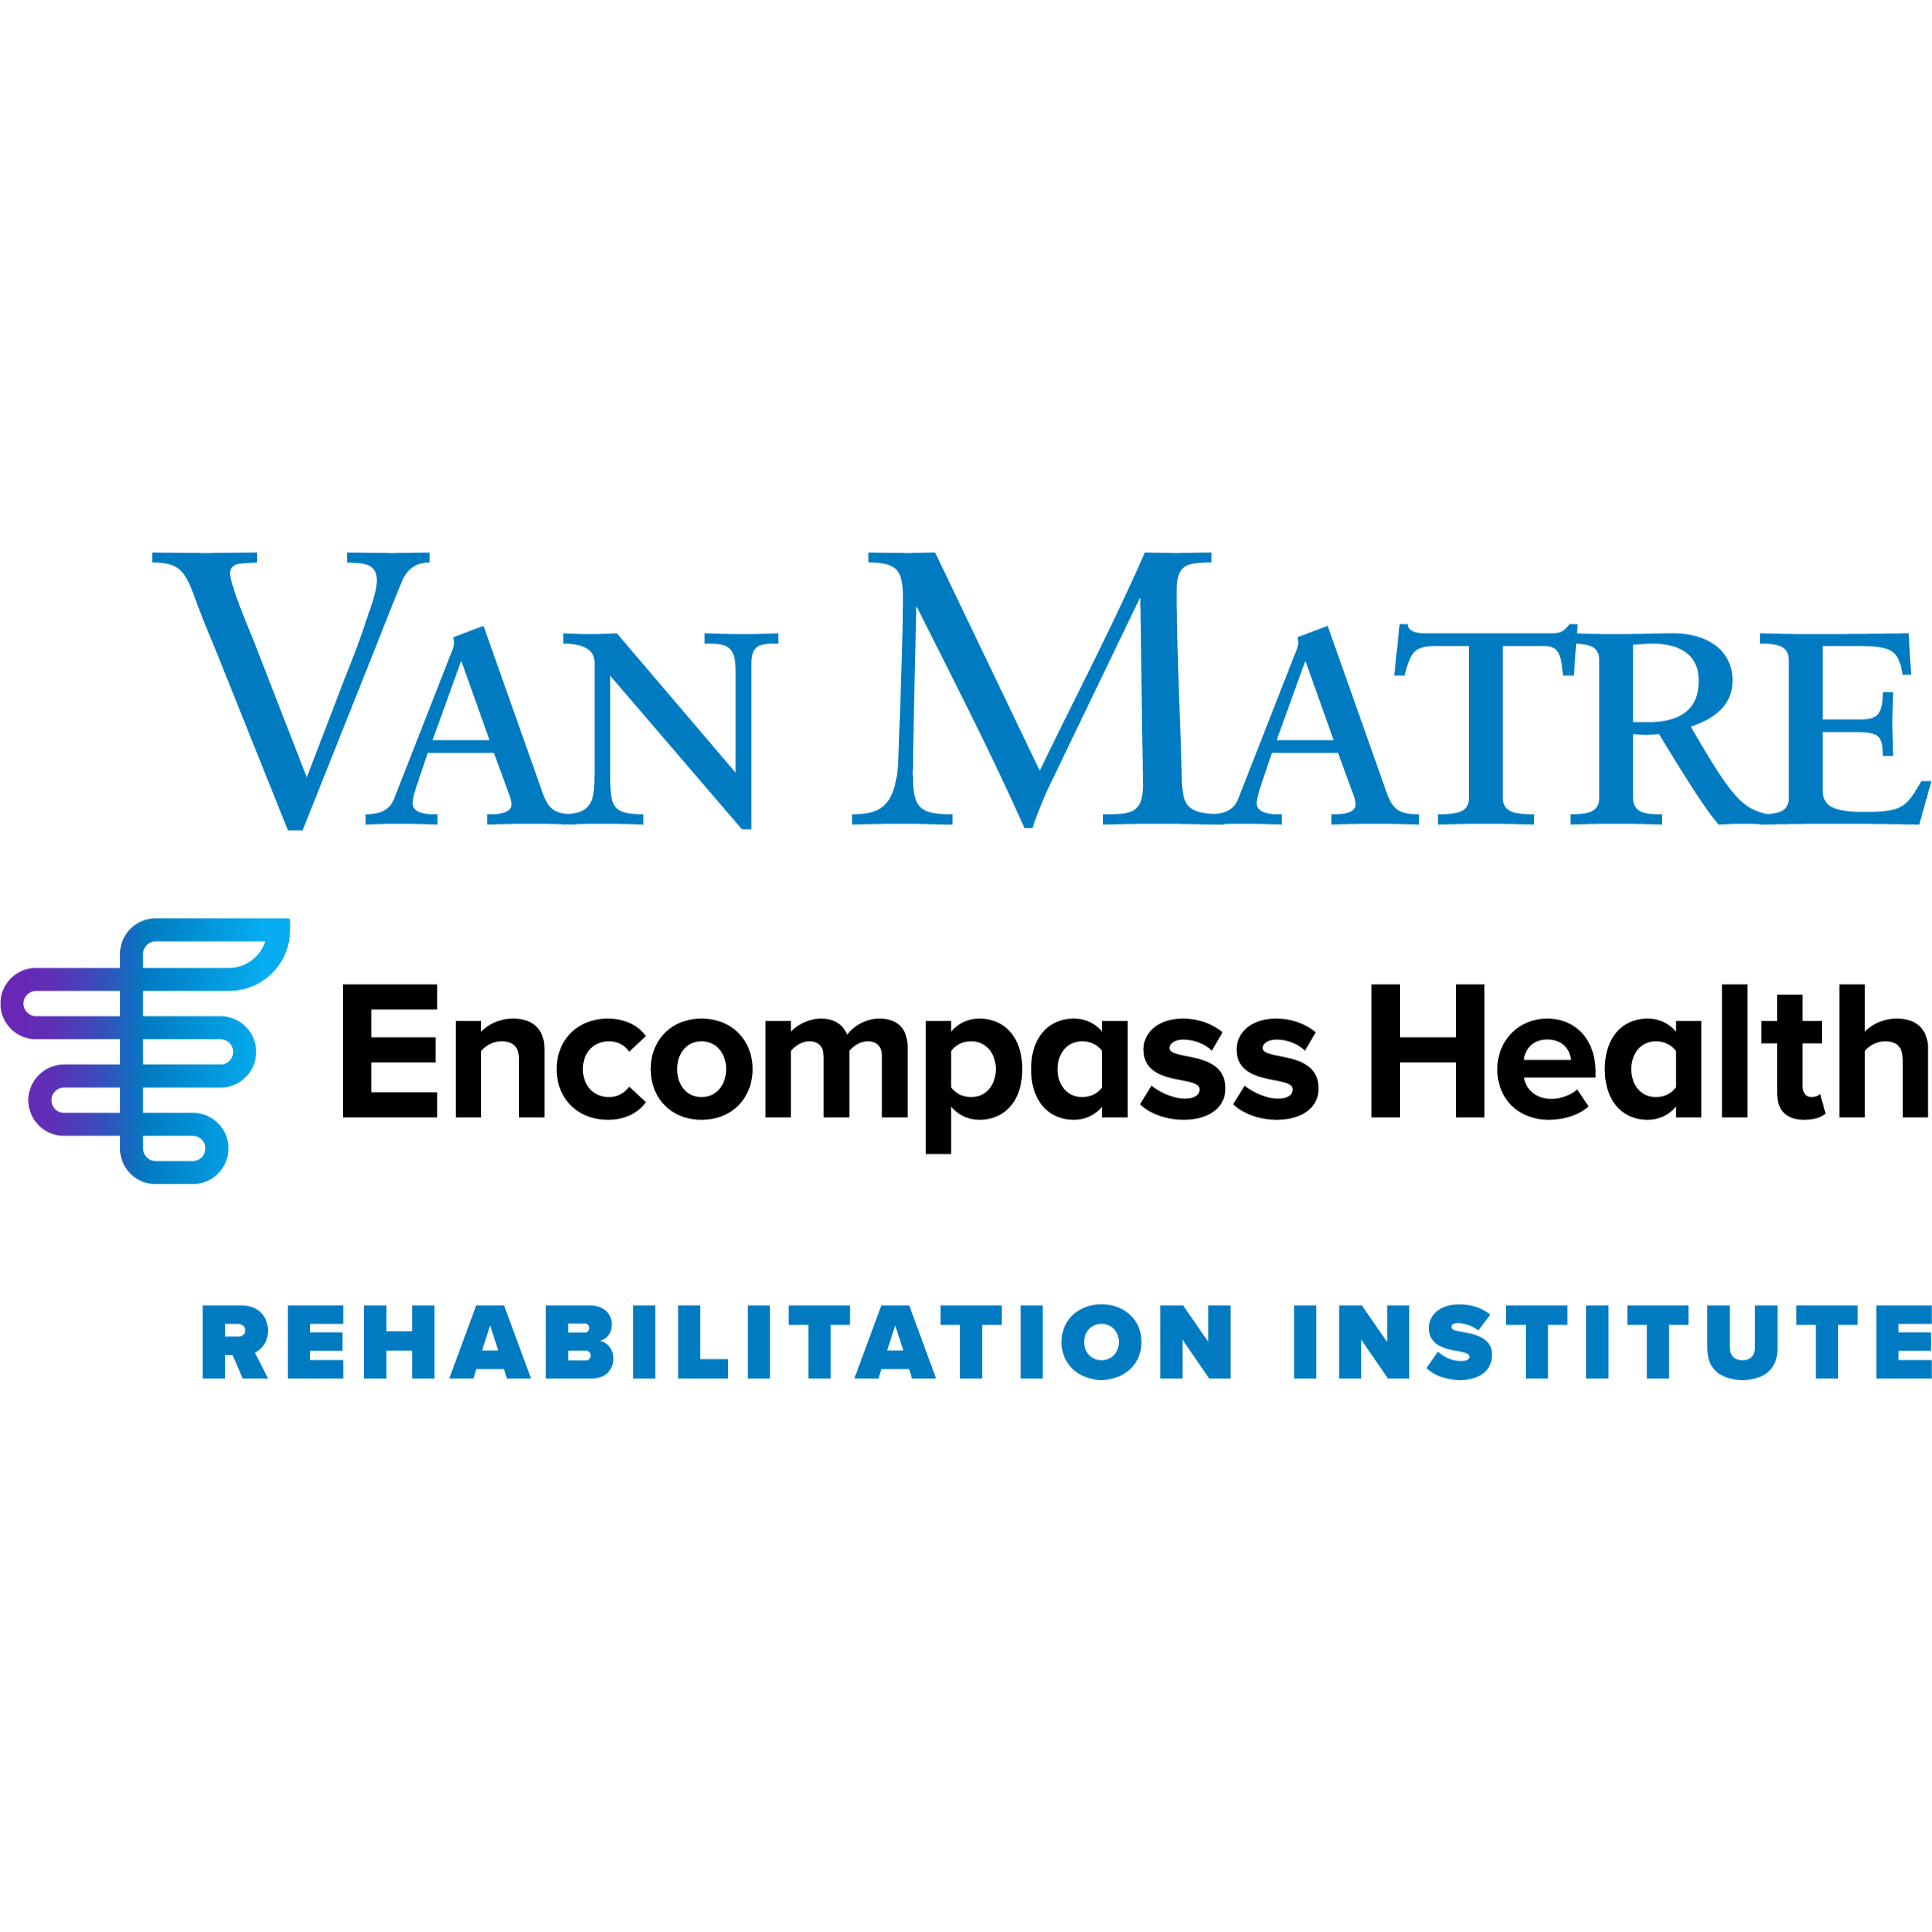 Van Matre Encompass Health Rehabilitation Institute - Rockford, IL 61108 - (815)381-8500 | ShowMeLocal.com